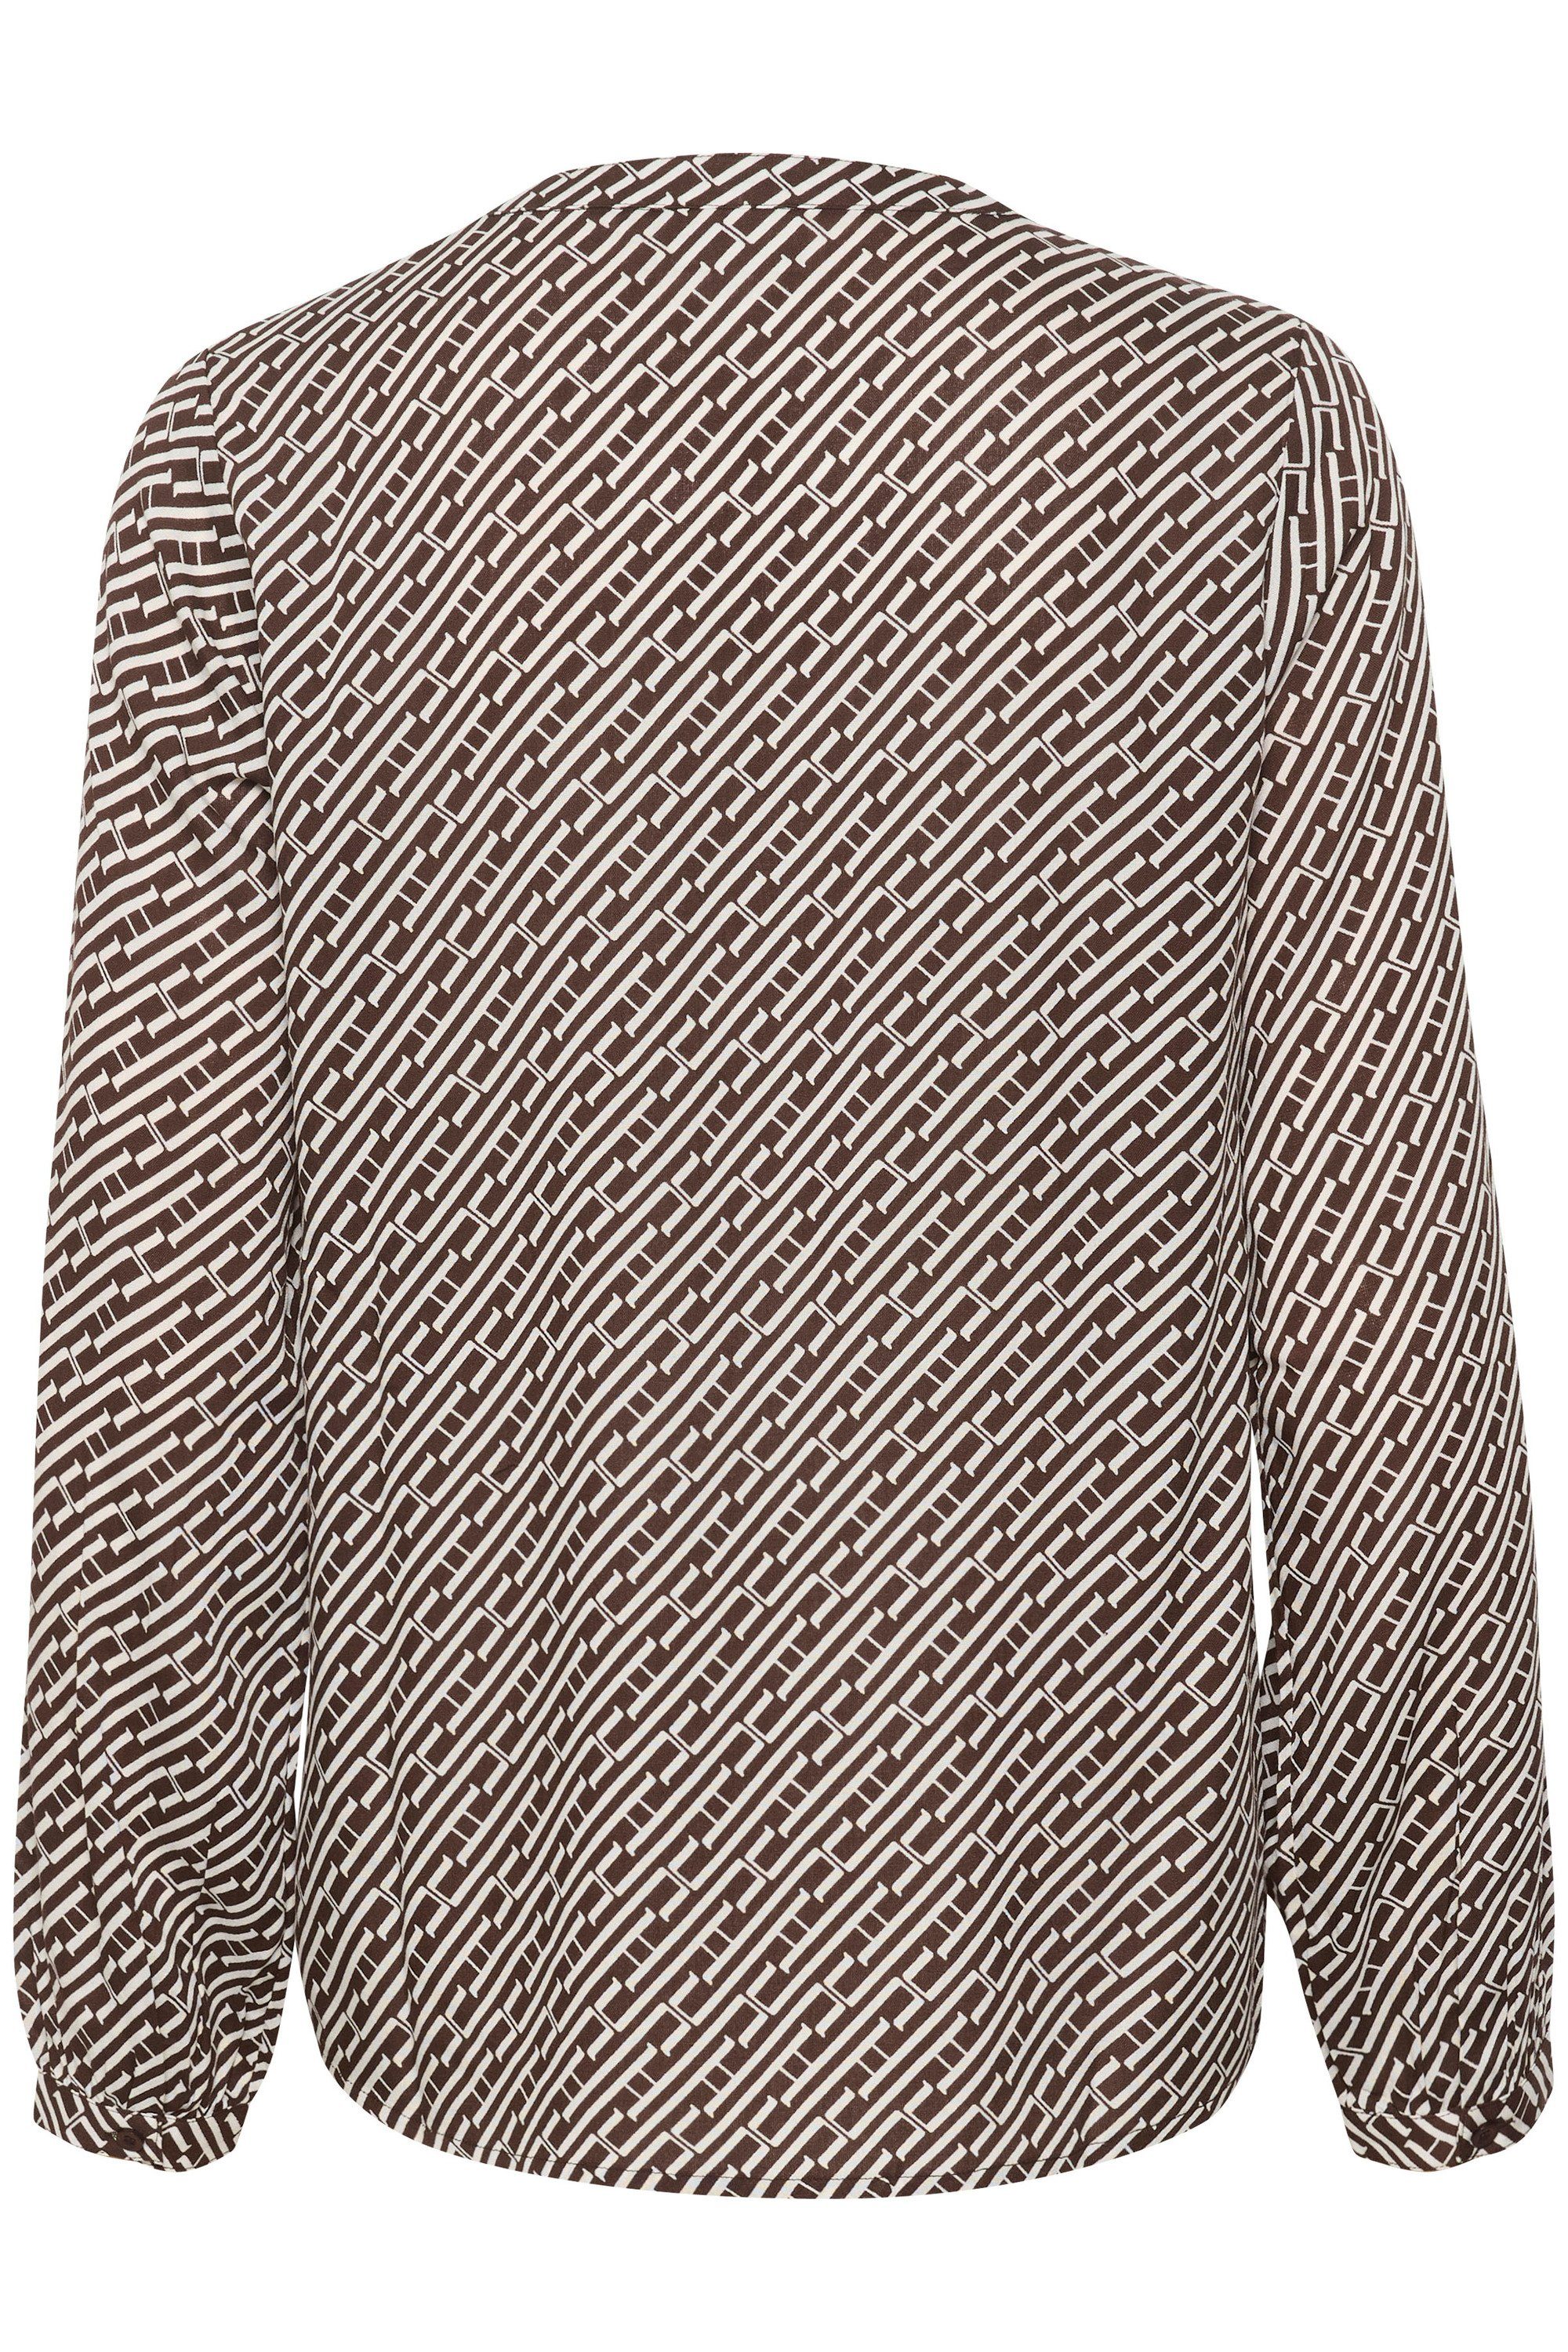 KAkenny KAFFE Stripe Sand Graphic Dollar Langarm-Bluse Langarmbluse